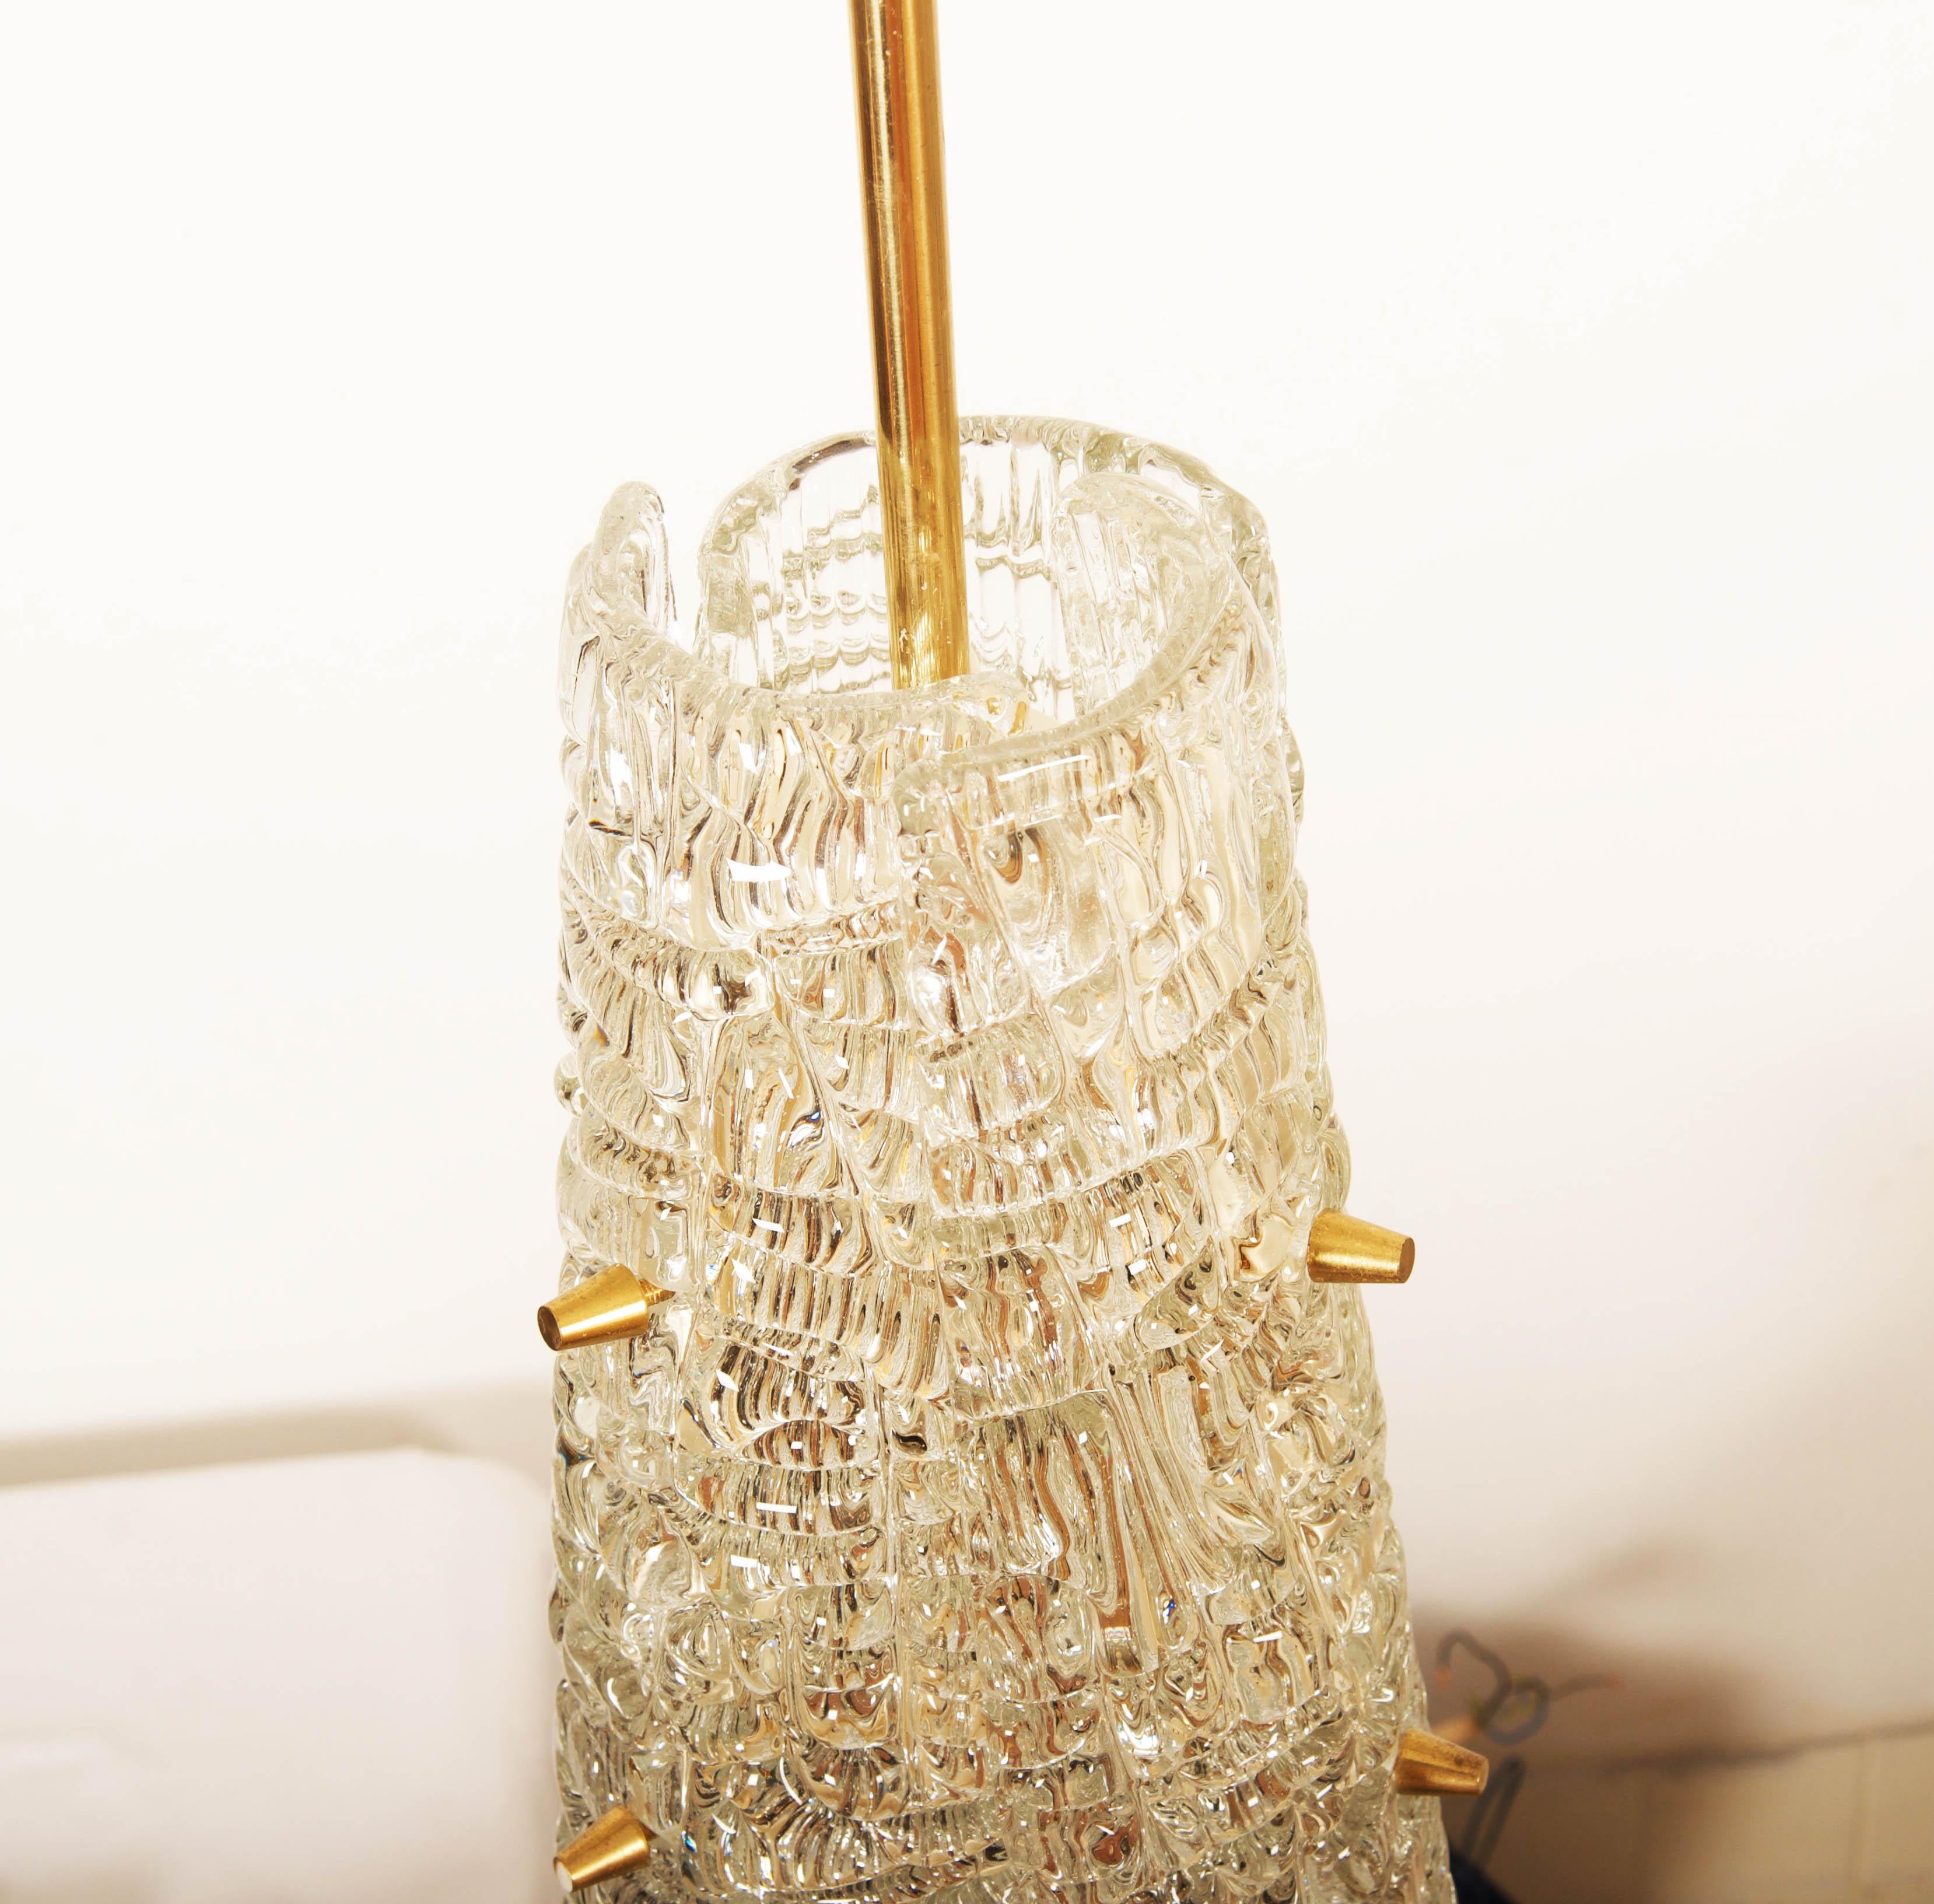 Midcentury J.T. Kalmar Crystal Glass Pendant Lamp For Sale 1